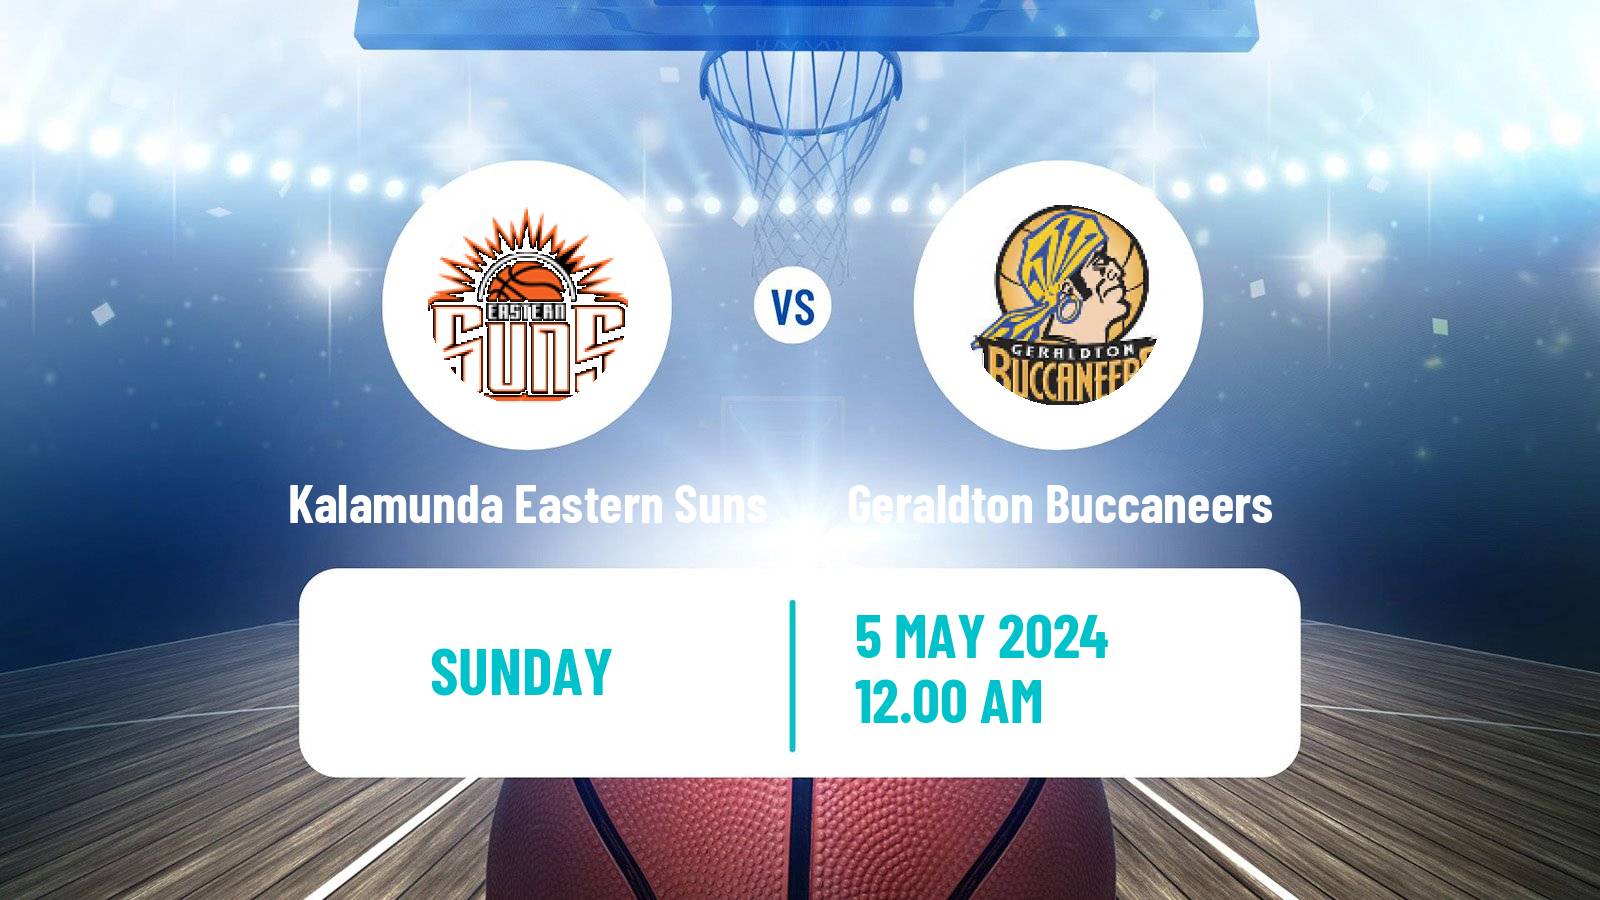 Basketball Australian NBL1 West Kalamunda Eastern Suns - Geraldton Buccaneers